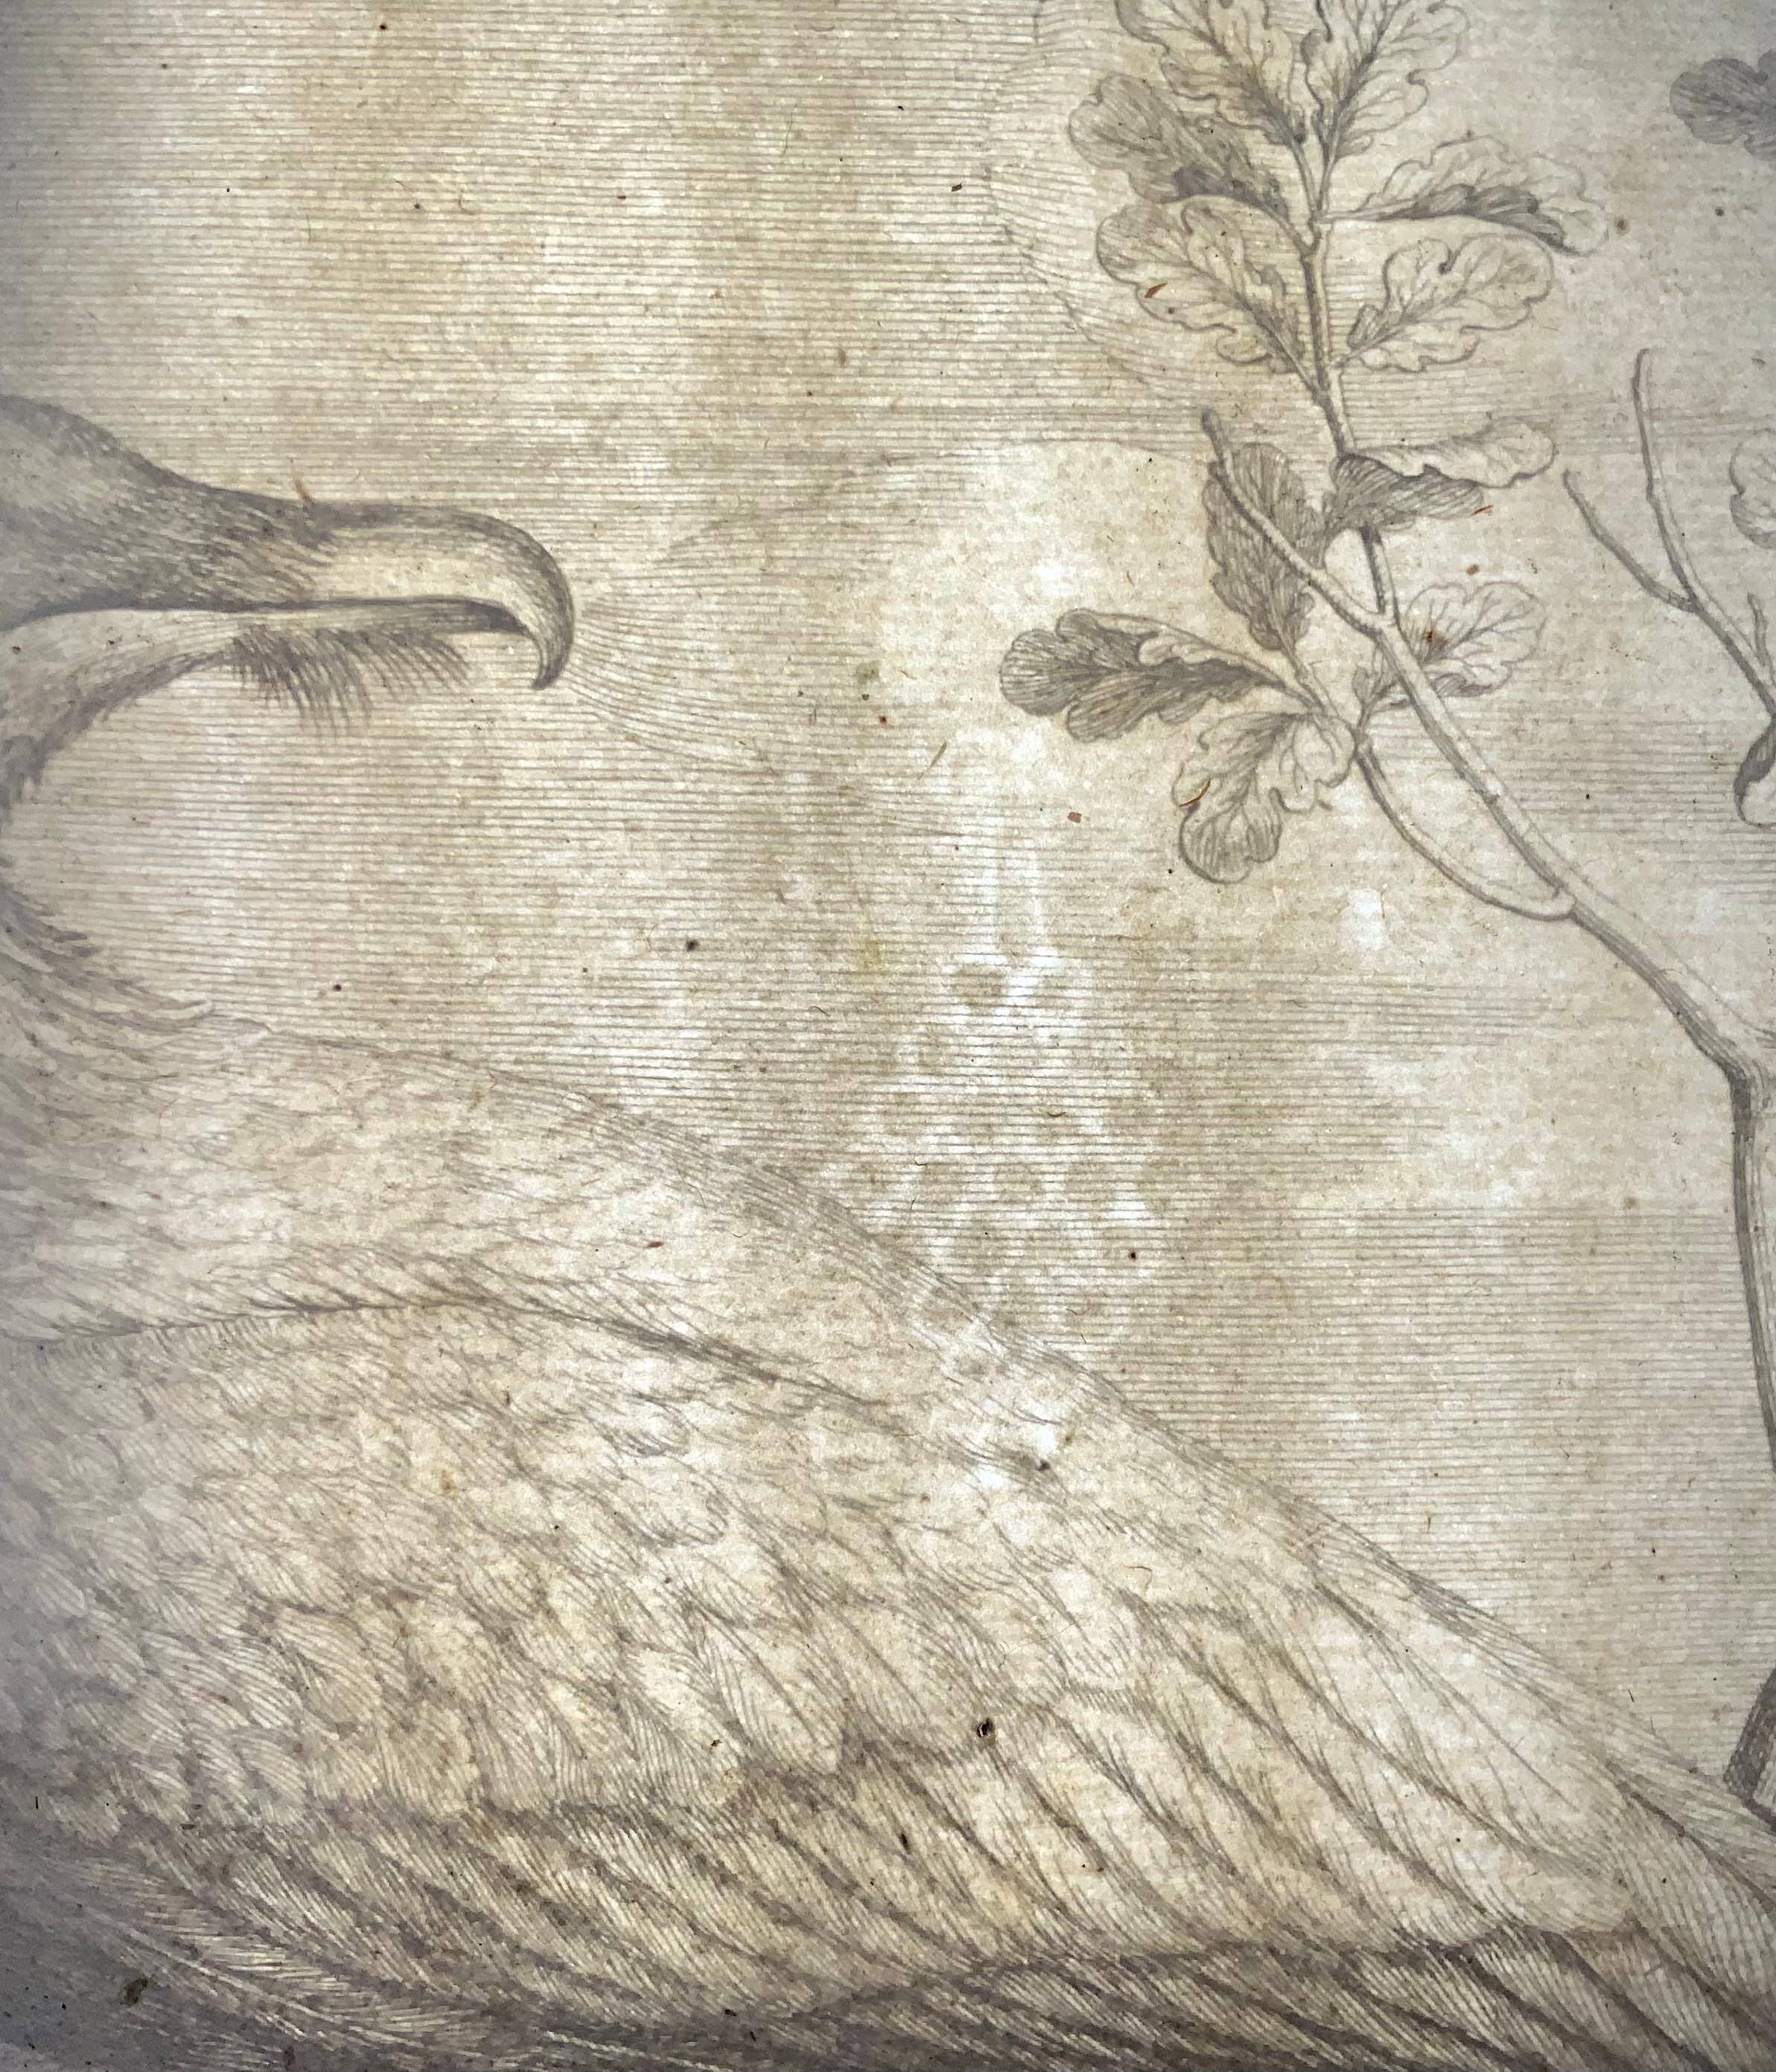 Hand-Painted Vulture, Bird of Prey, Nicolas Robert, Folio Etching For Sale